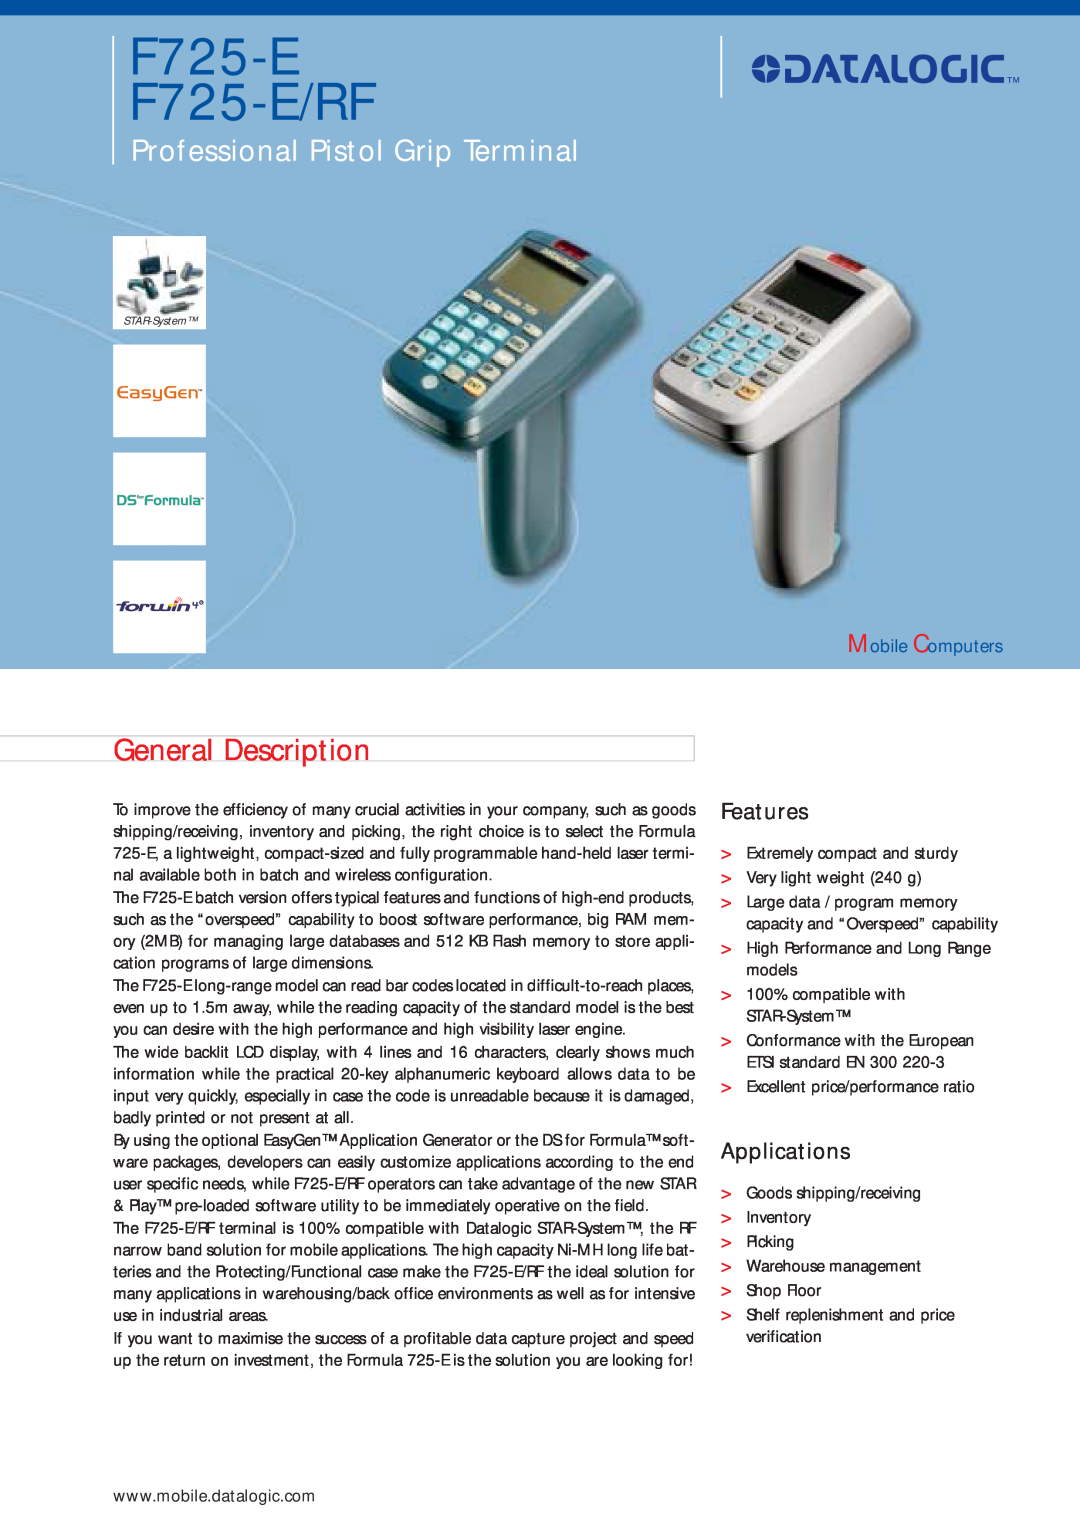 Datalogic Scanning dimensions General Description, Mobile Computers, F725-E F725-E/RF, Features, Applications 